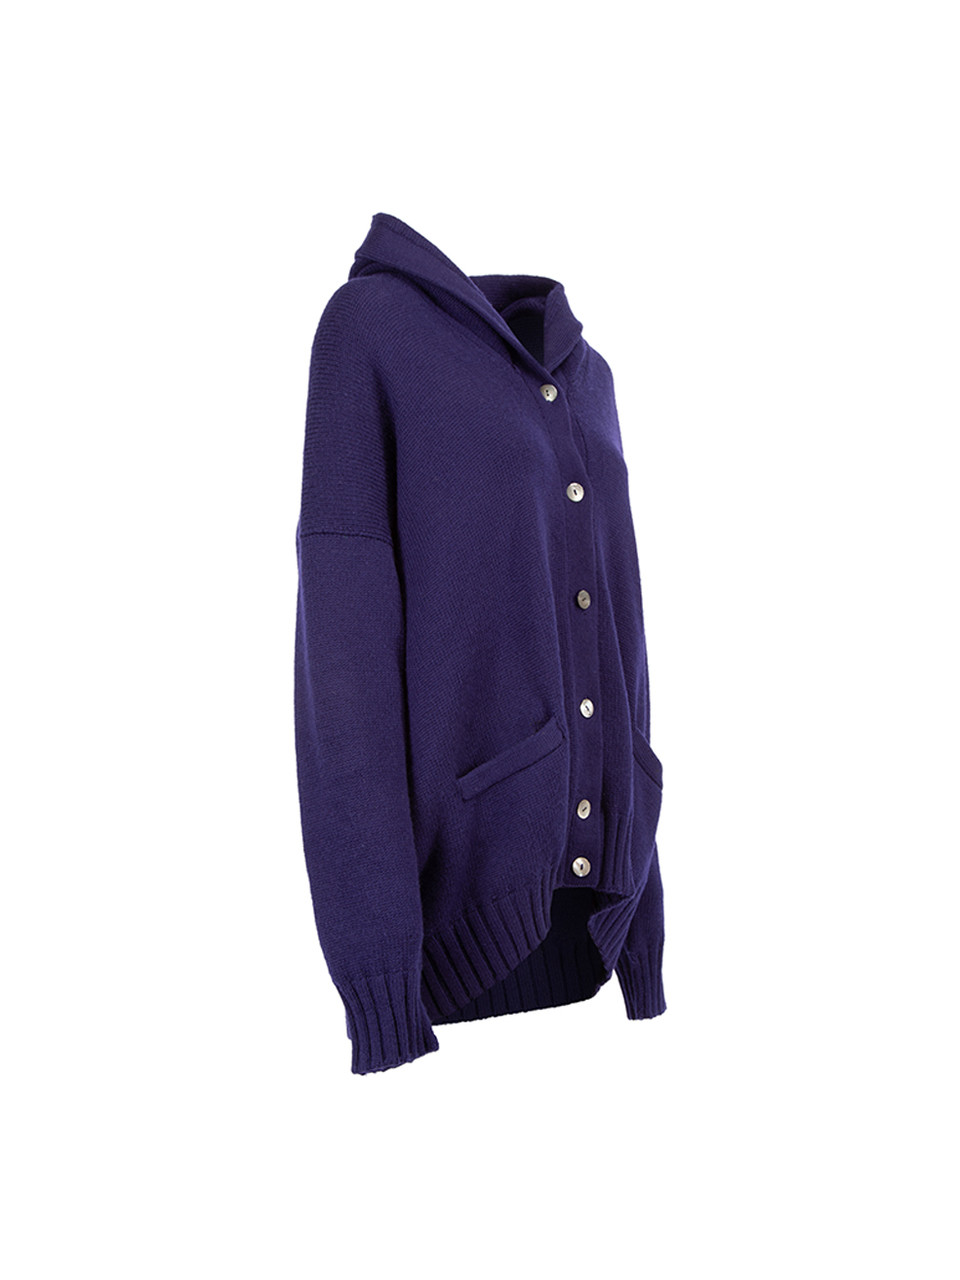 Romeo Gigli Vintage Purple Hooded Cardigan